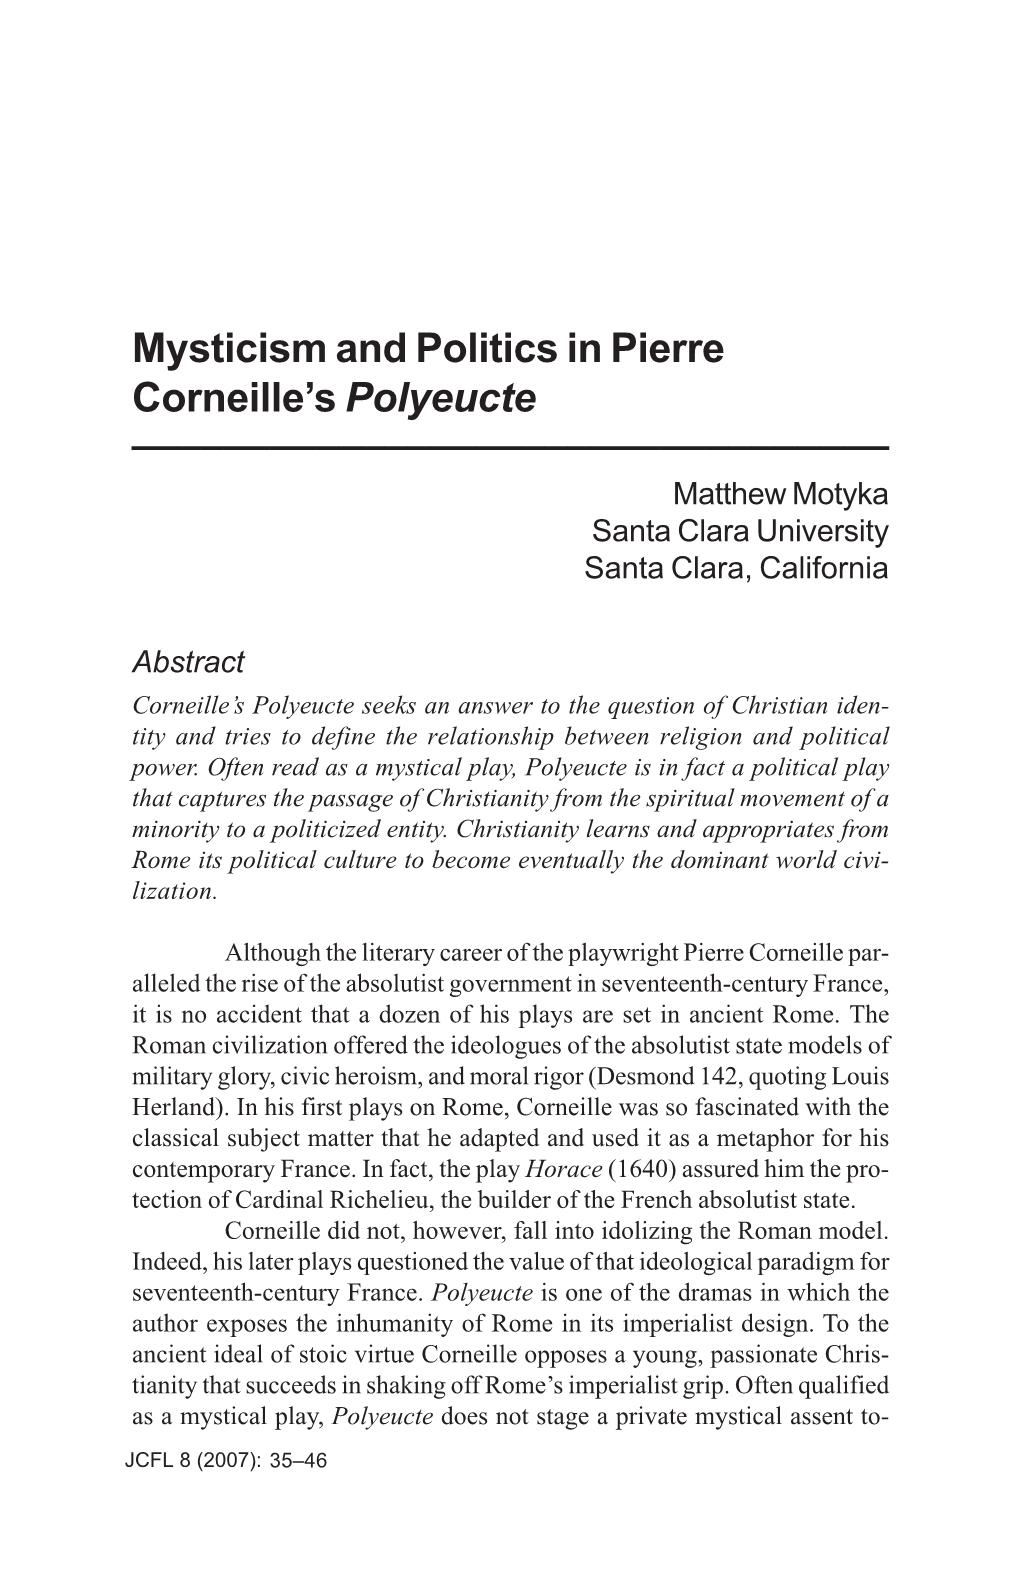 Mysticism and Politics in Pierre Corneille's Polyeucte